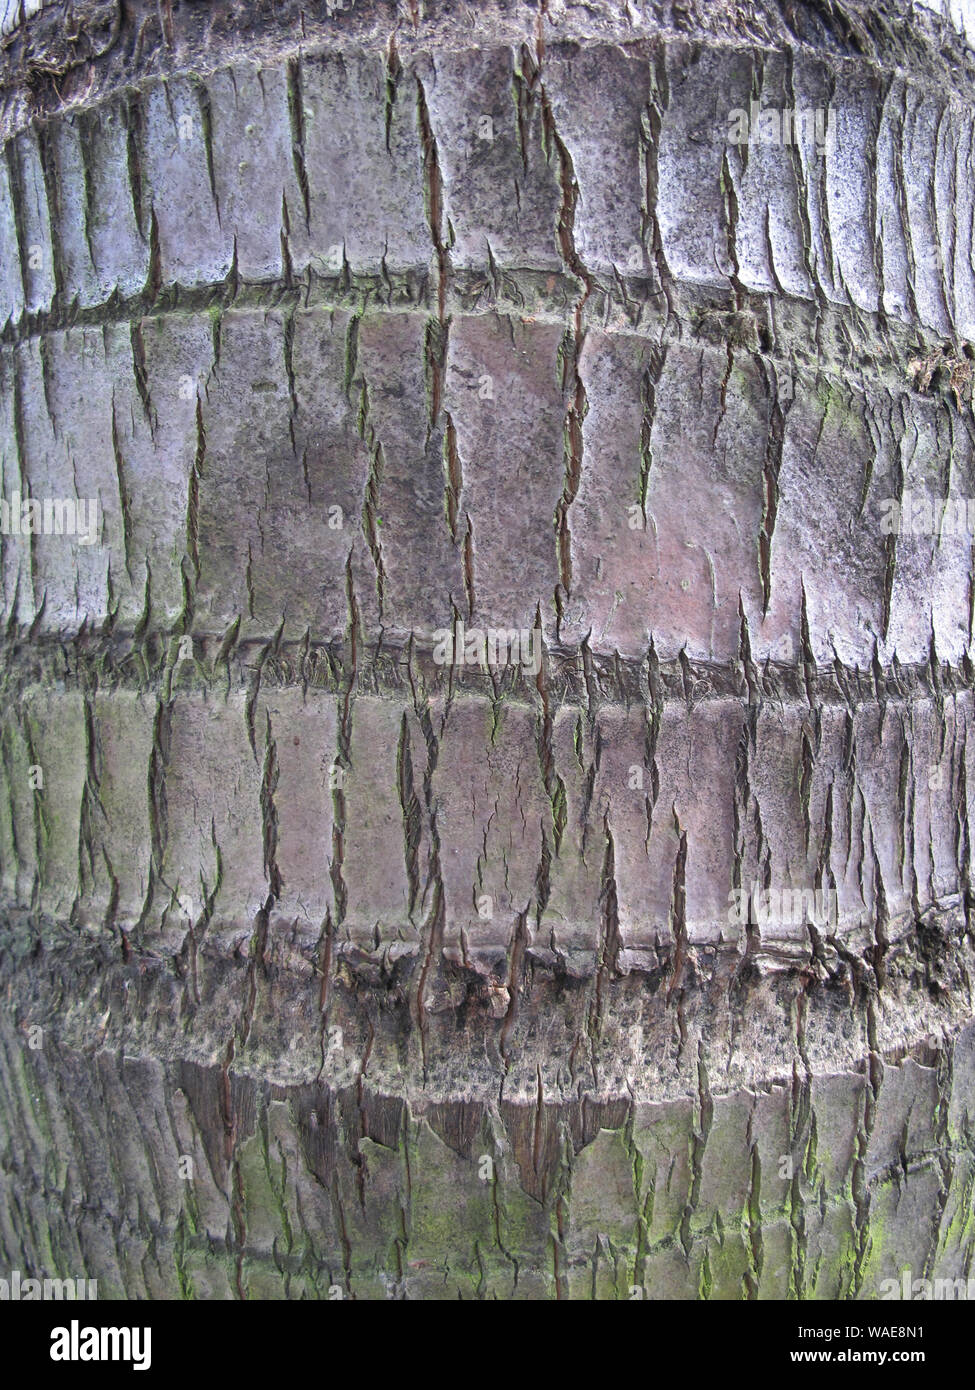 La texture de l'écorce des arbres de noix de coco Banque D'Images